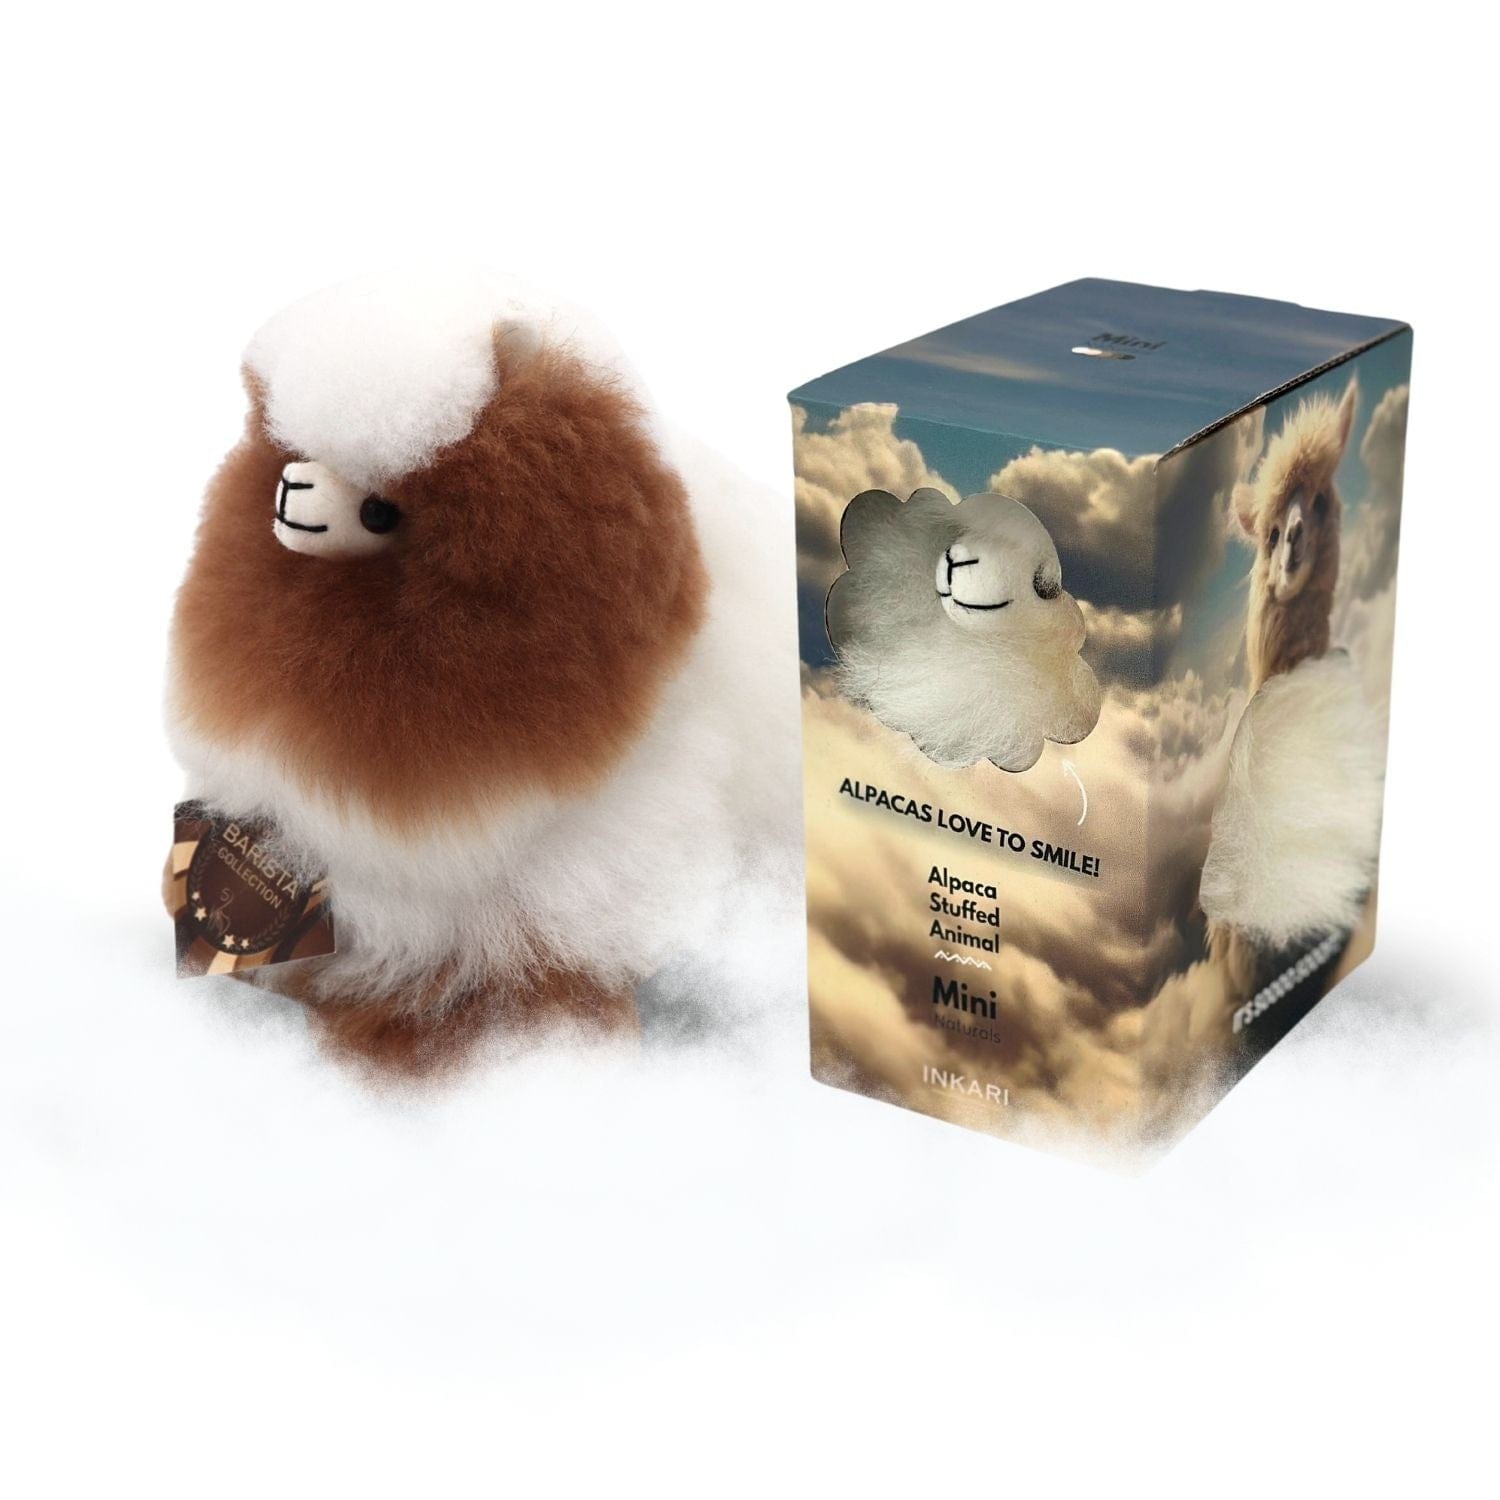 Barista's - Mini (15cm) - Alpaca knuffeldier